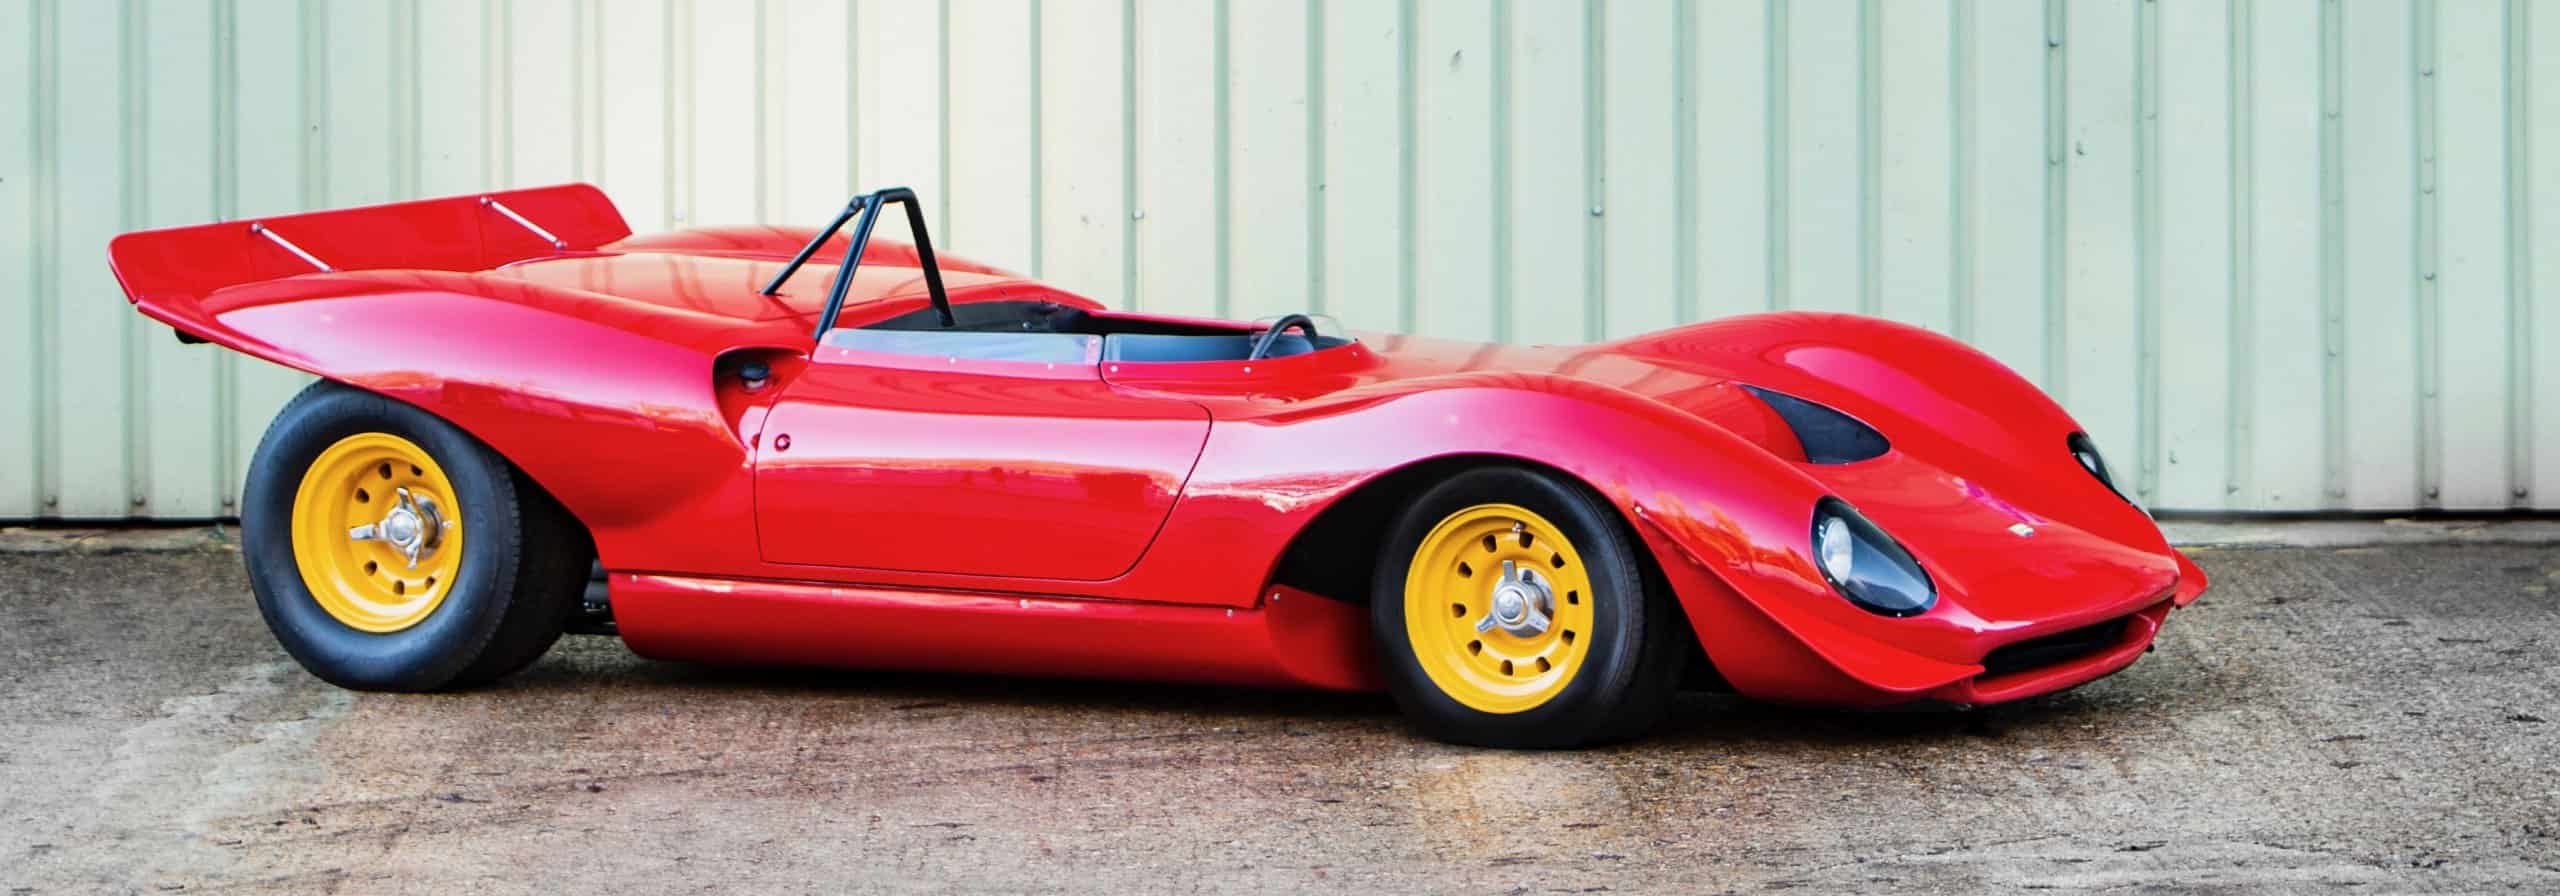 Ferrari Dino, Bonhams offers 1966 Ferrari Dino sports prototype racer at Paris auction, ClassicCars.com Journal